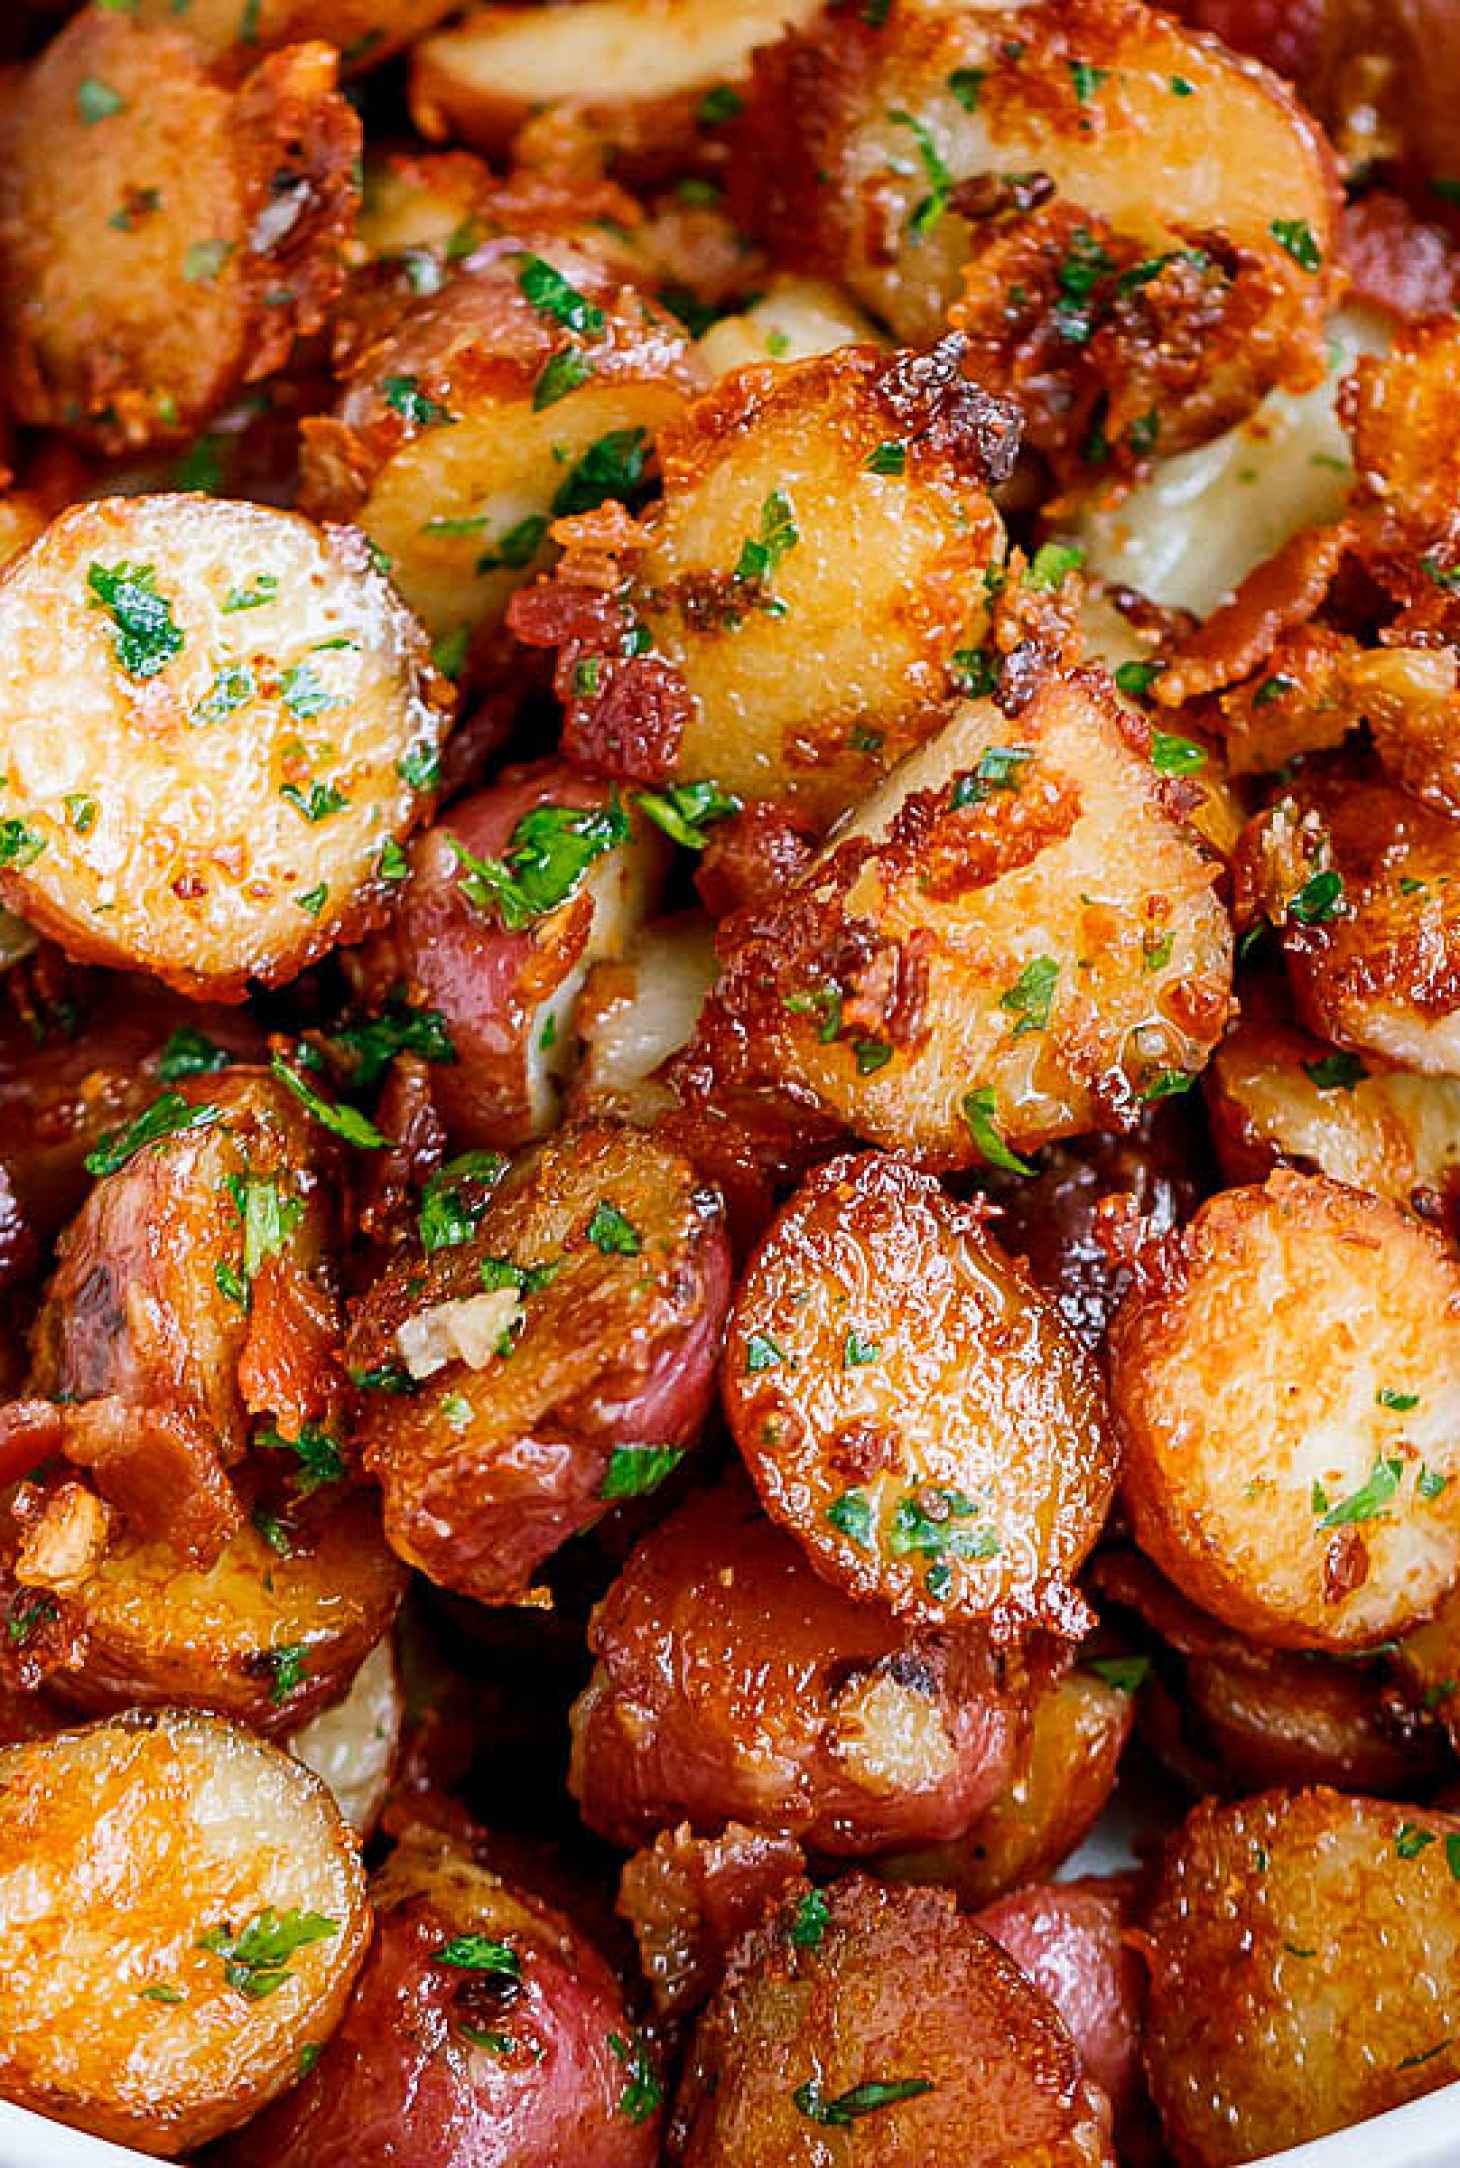 Potato Side Dish Recipes 12 Of The Best Potato Recipes